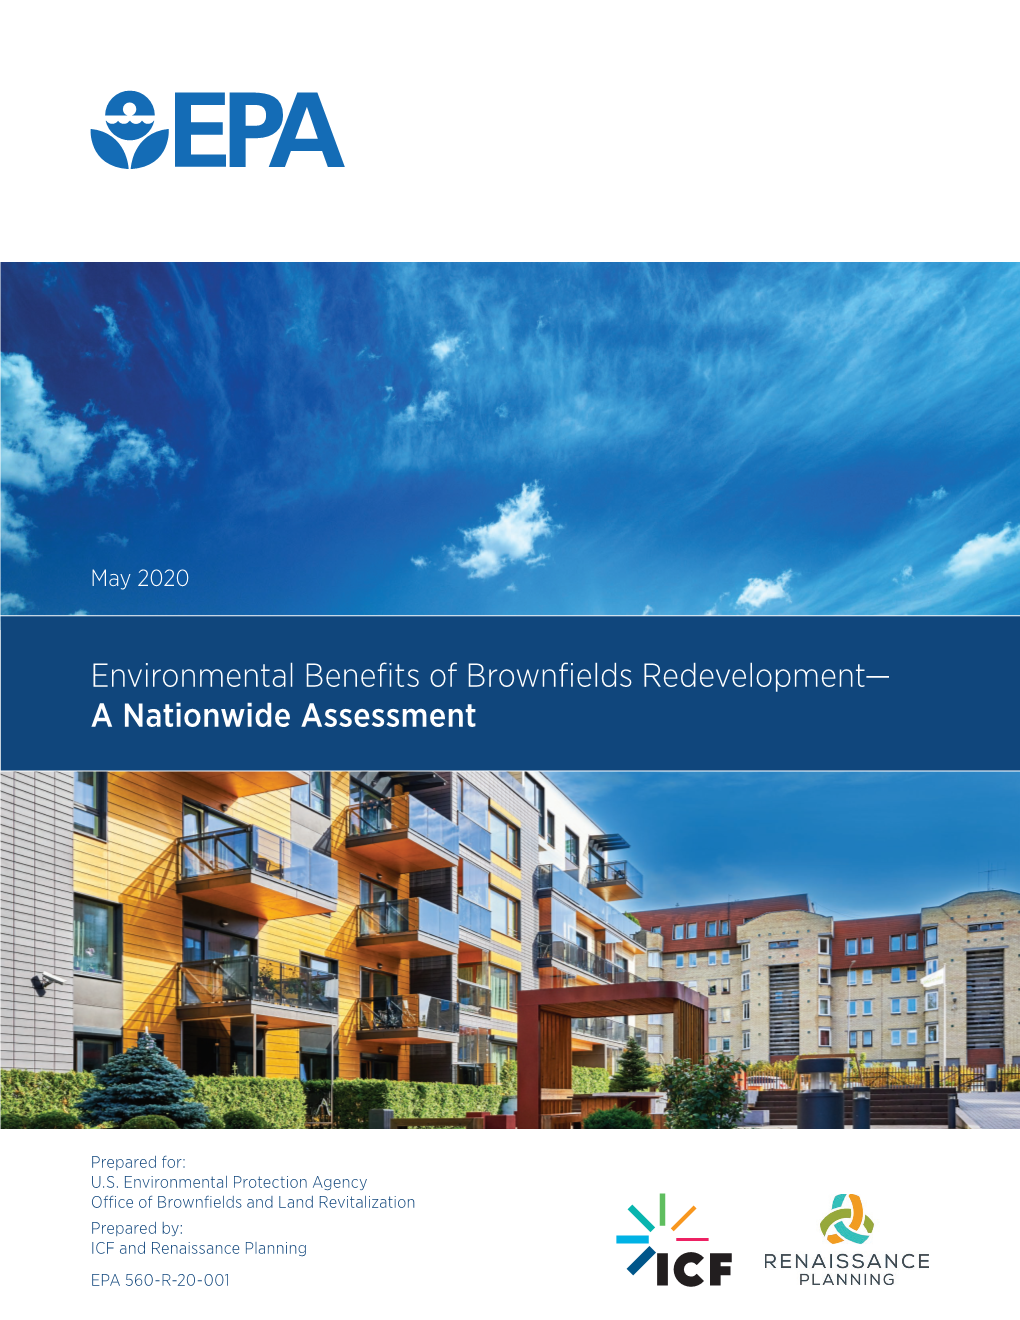 Environmental Benefits of Brownfields Redevelopment – a Nationwide Assessment